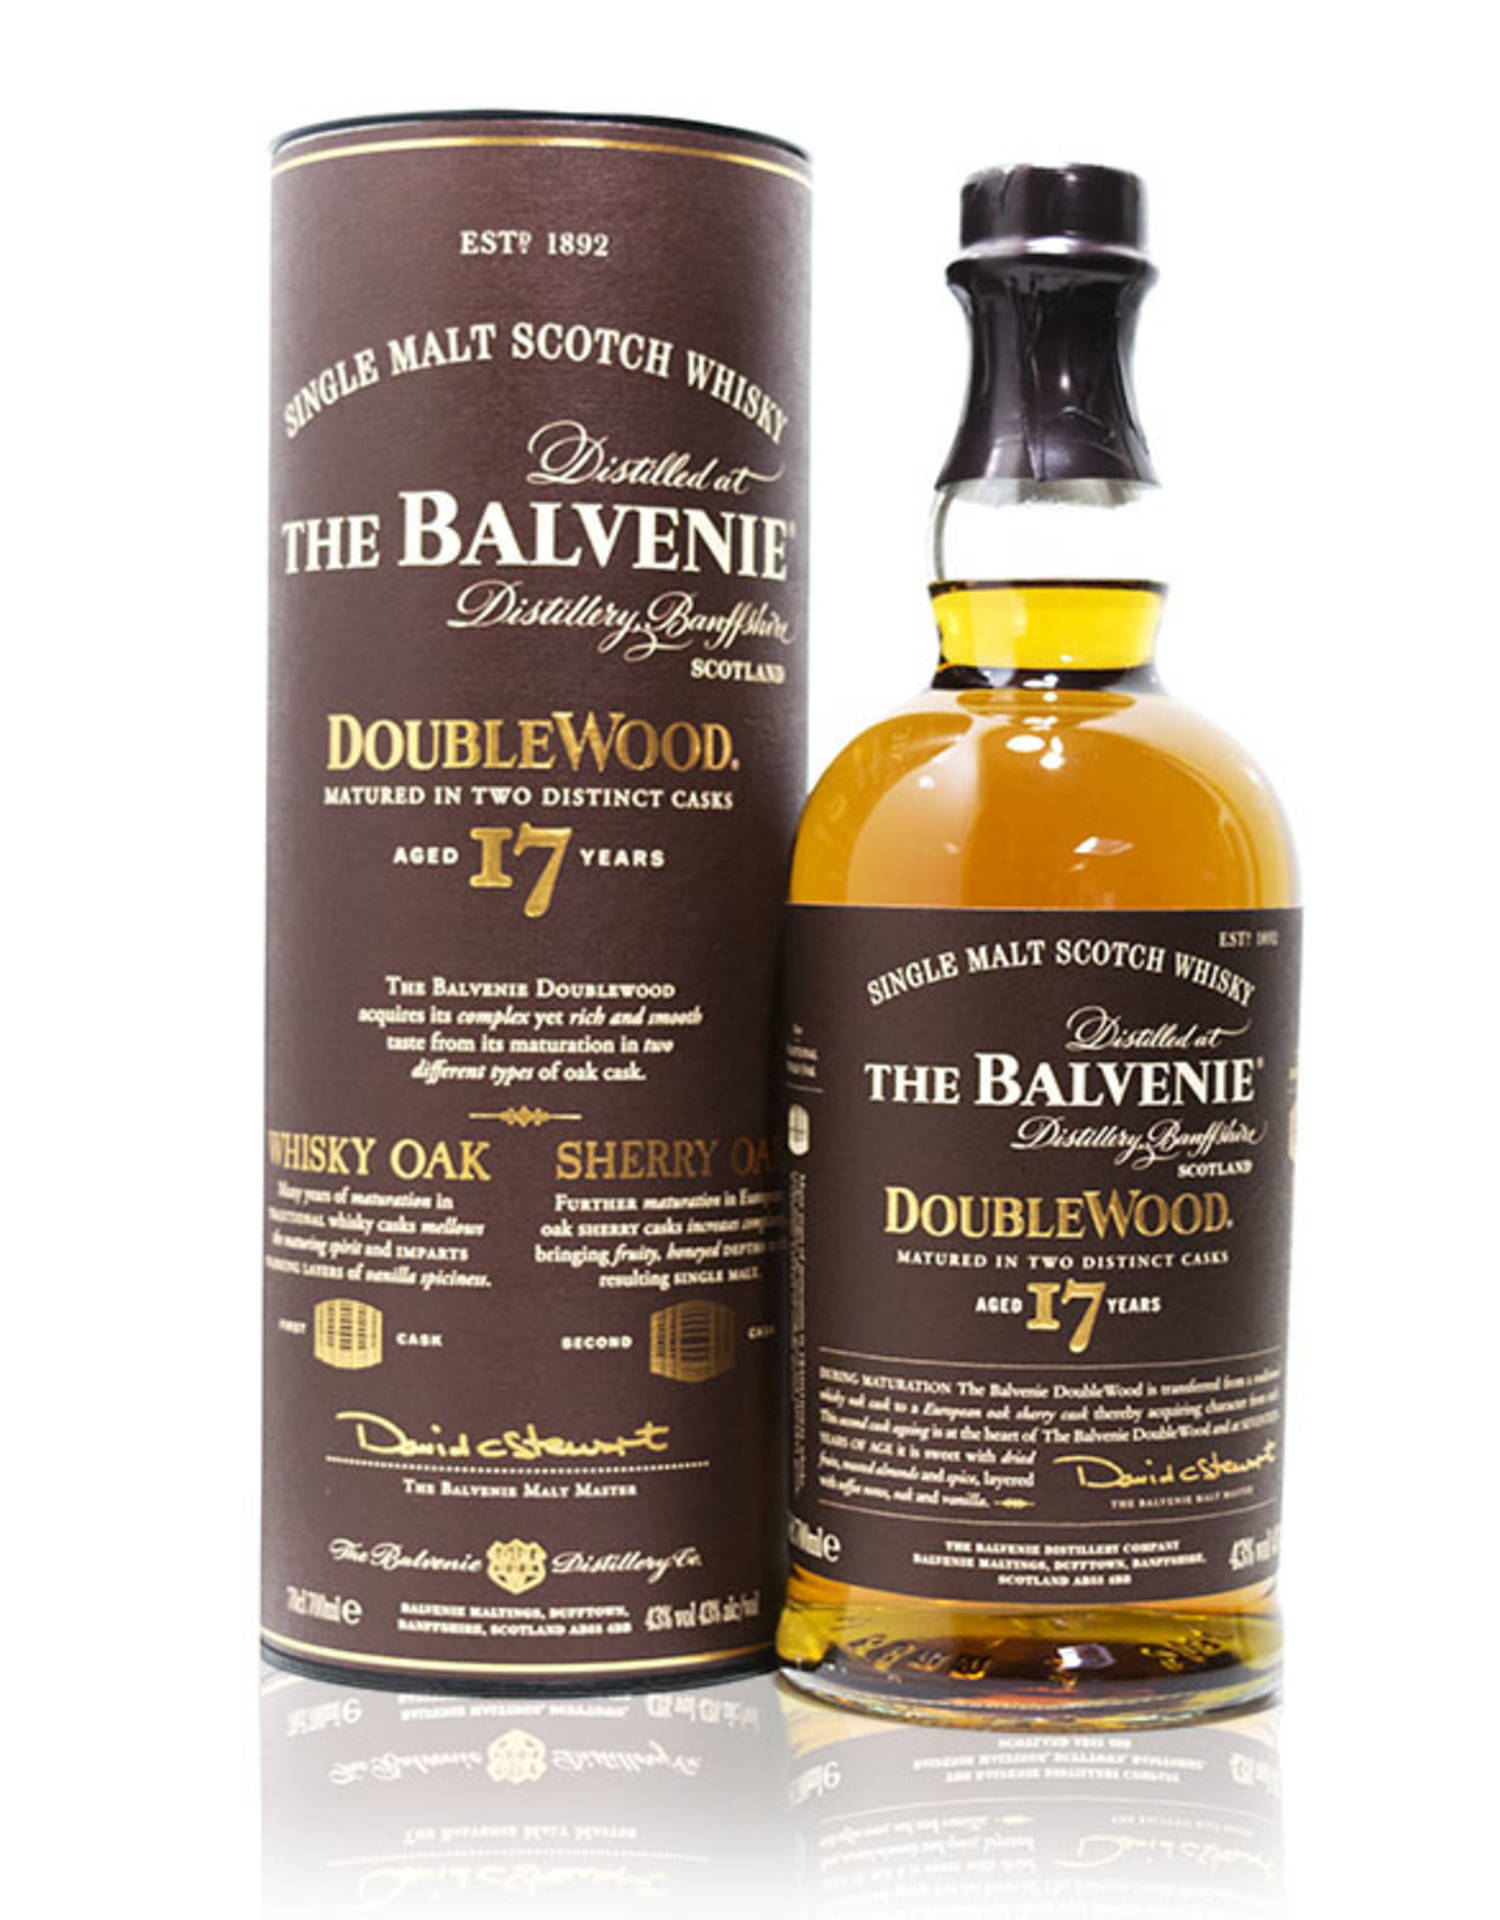 Etiketten För The Balvenie Scotch Single Malt Whisky Ser Fantastisk Ut Som Tapet På Min Dator. Wallpaper